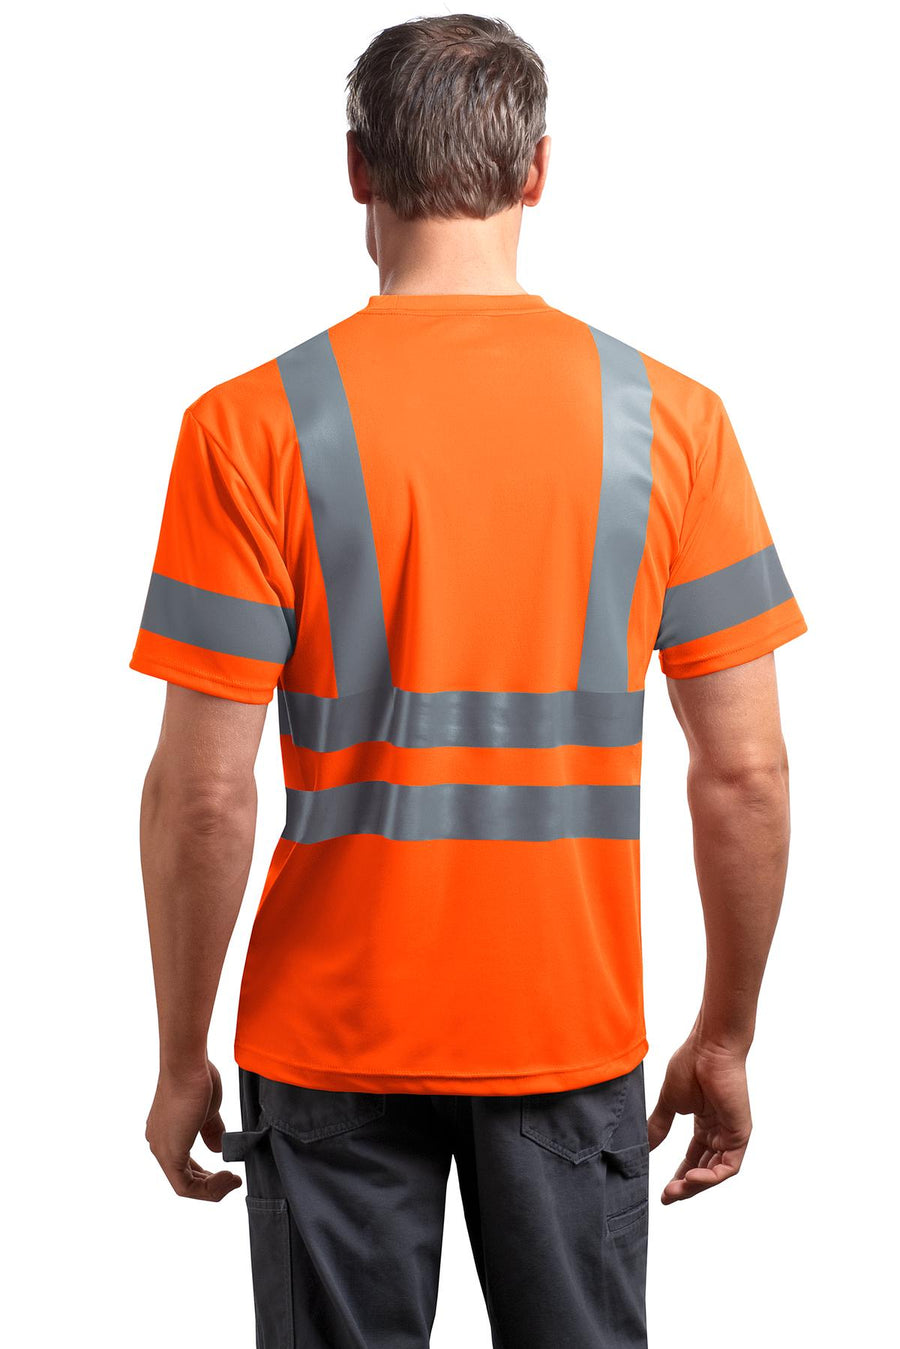 CS408-Safety Orange-back_model